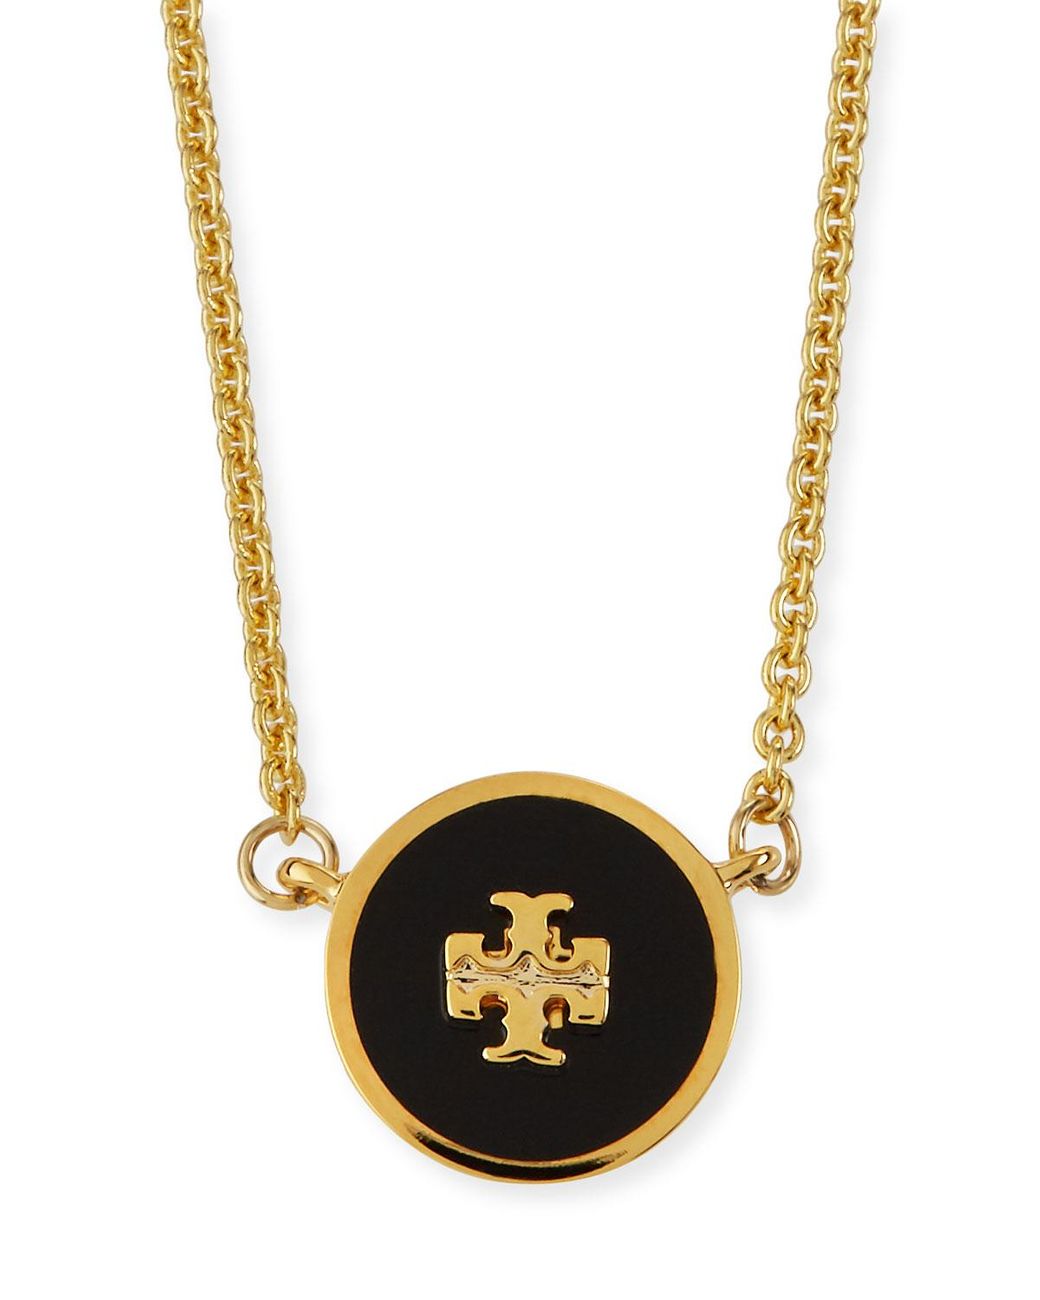 Tory Burch Kira Enameled Pendant Necklace in Black/Gold (Metallic